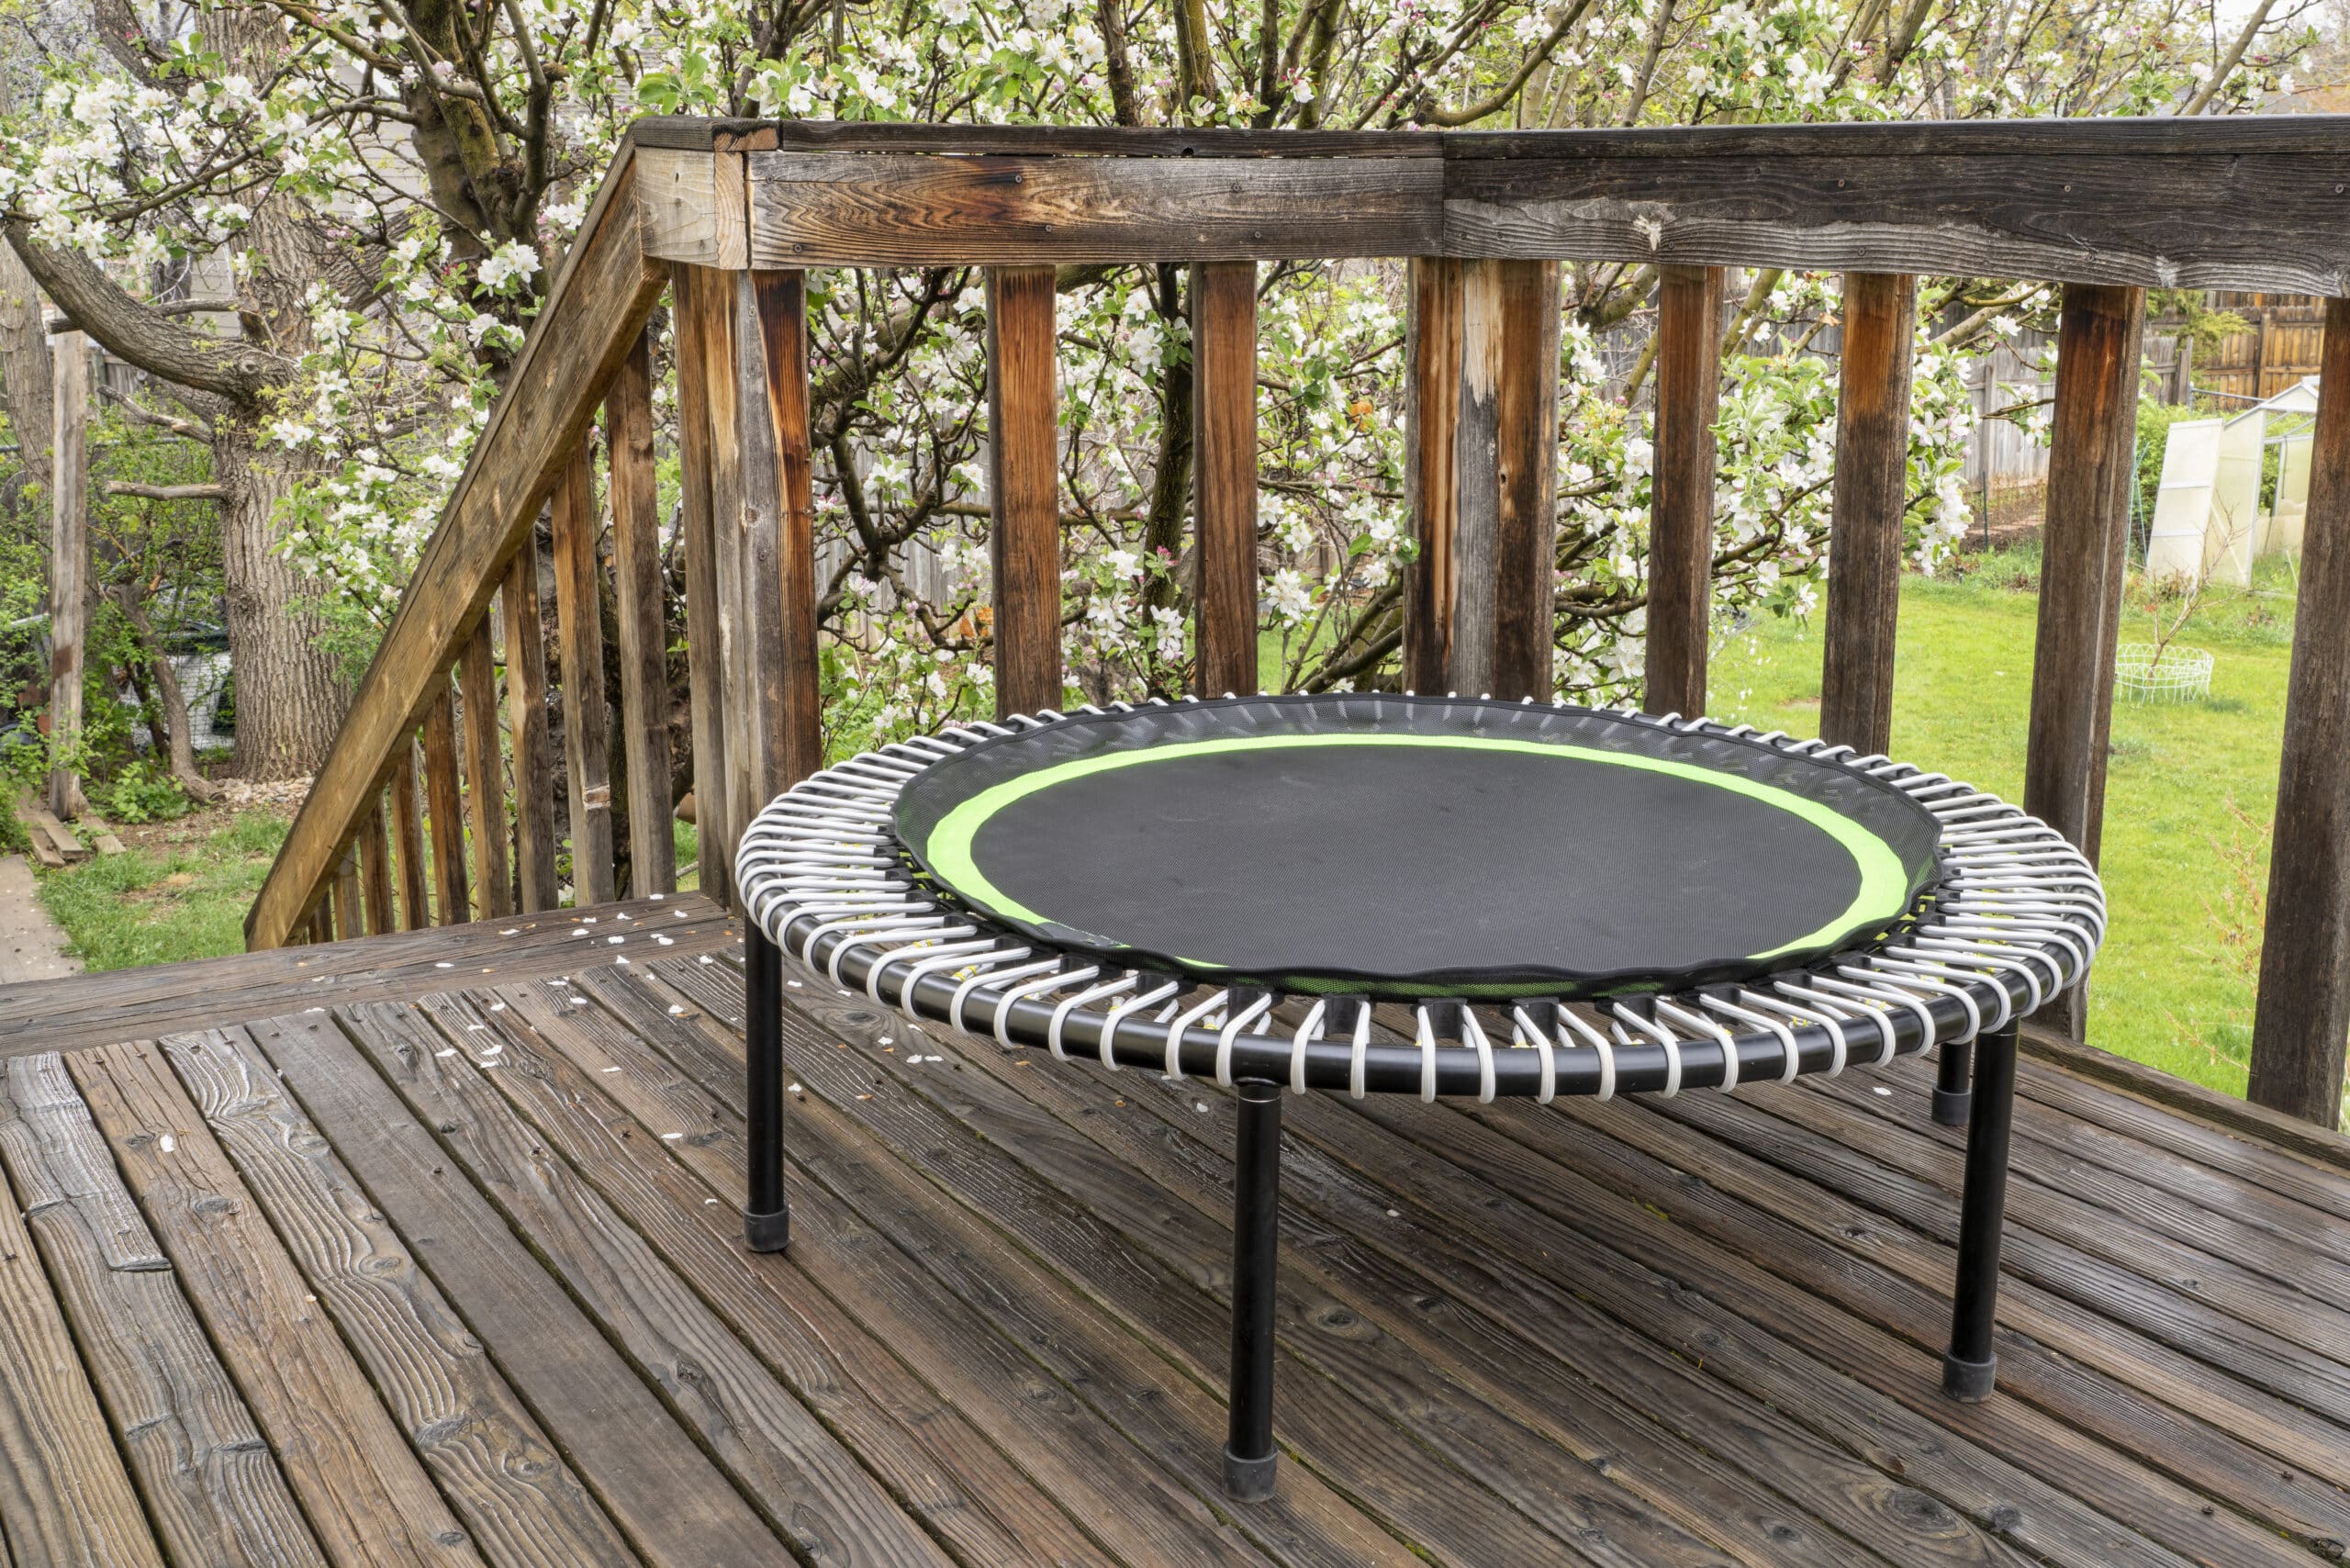 www.appr.com : How do you take care of an outdoor trampoline?